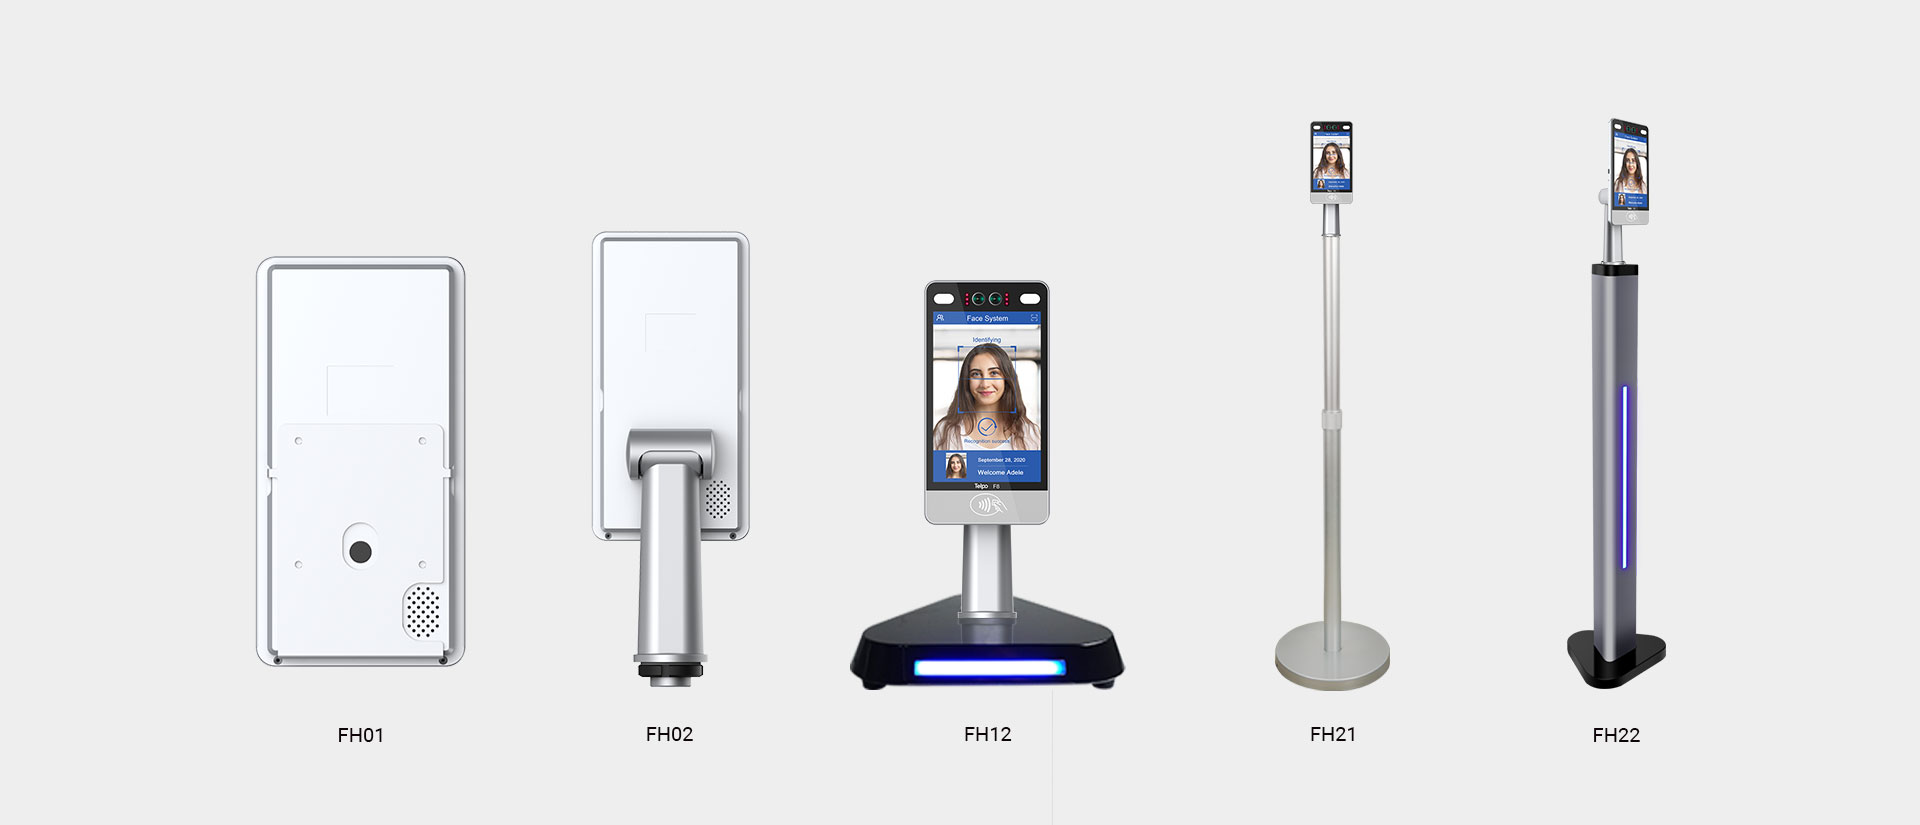 wall-hanging, desktop,turnstile, floor standing bracket facial recognition device machine F8 